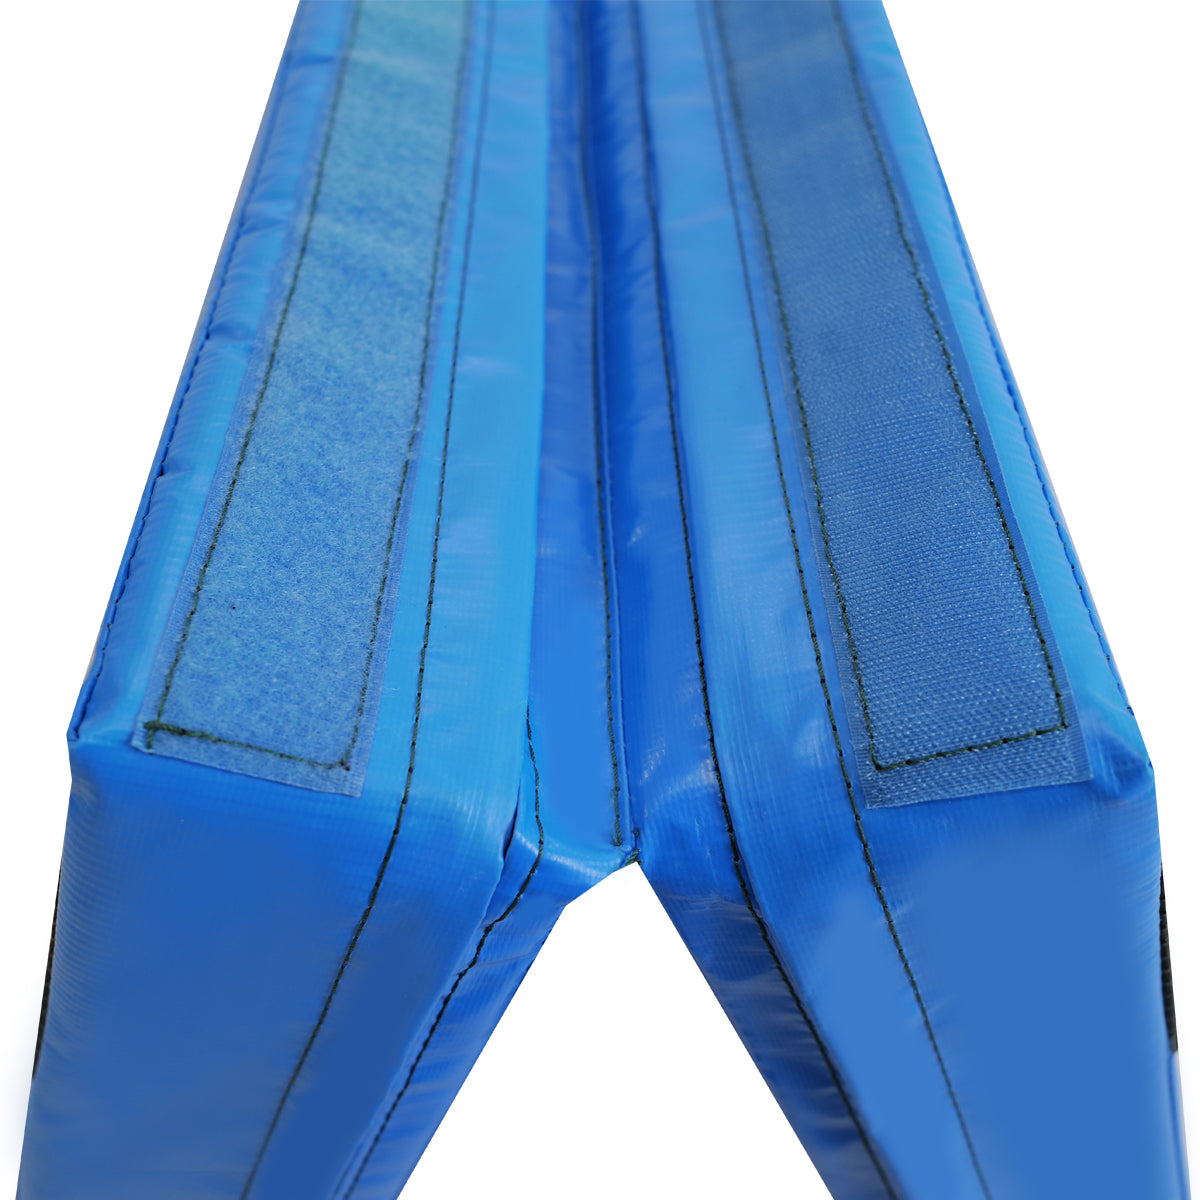 MEMAX 10cm Thick Folding Tumbling Gym Mat - AUCHOICE